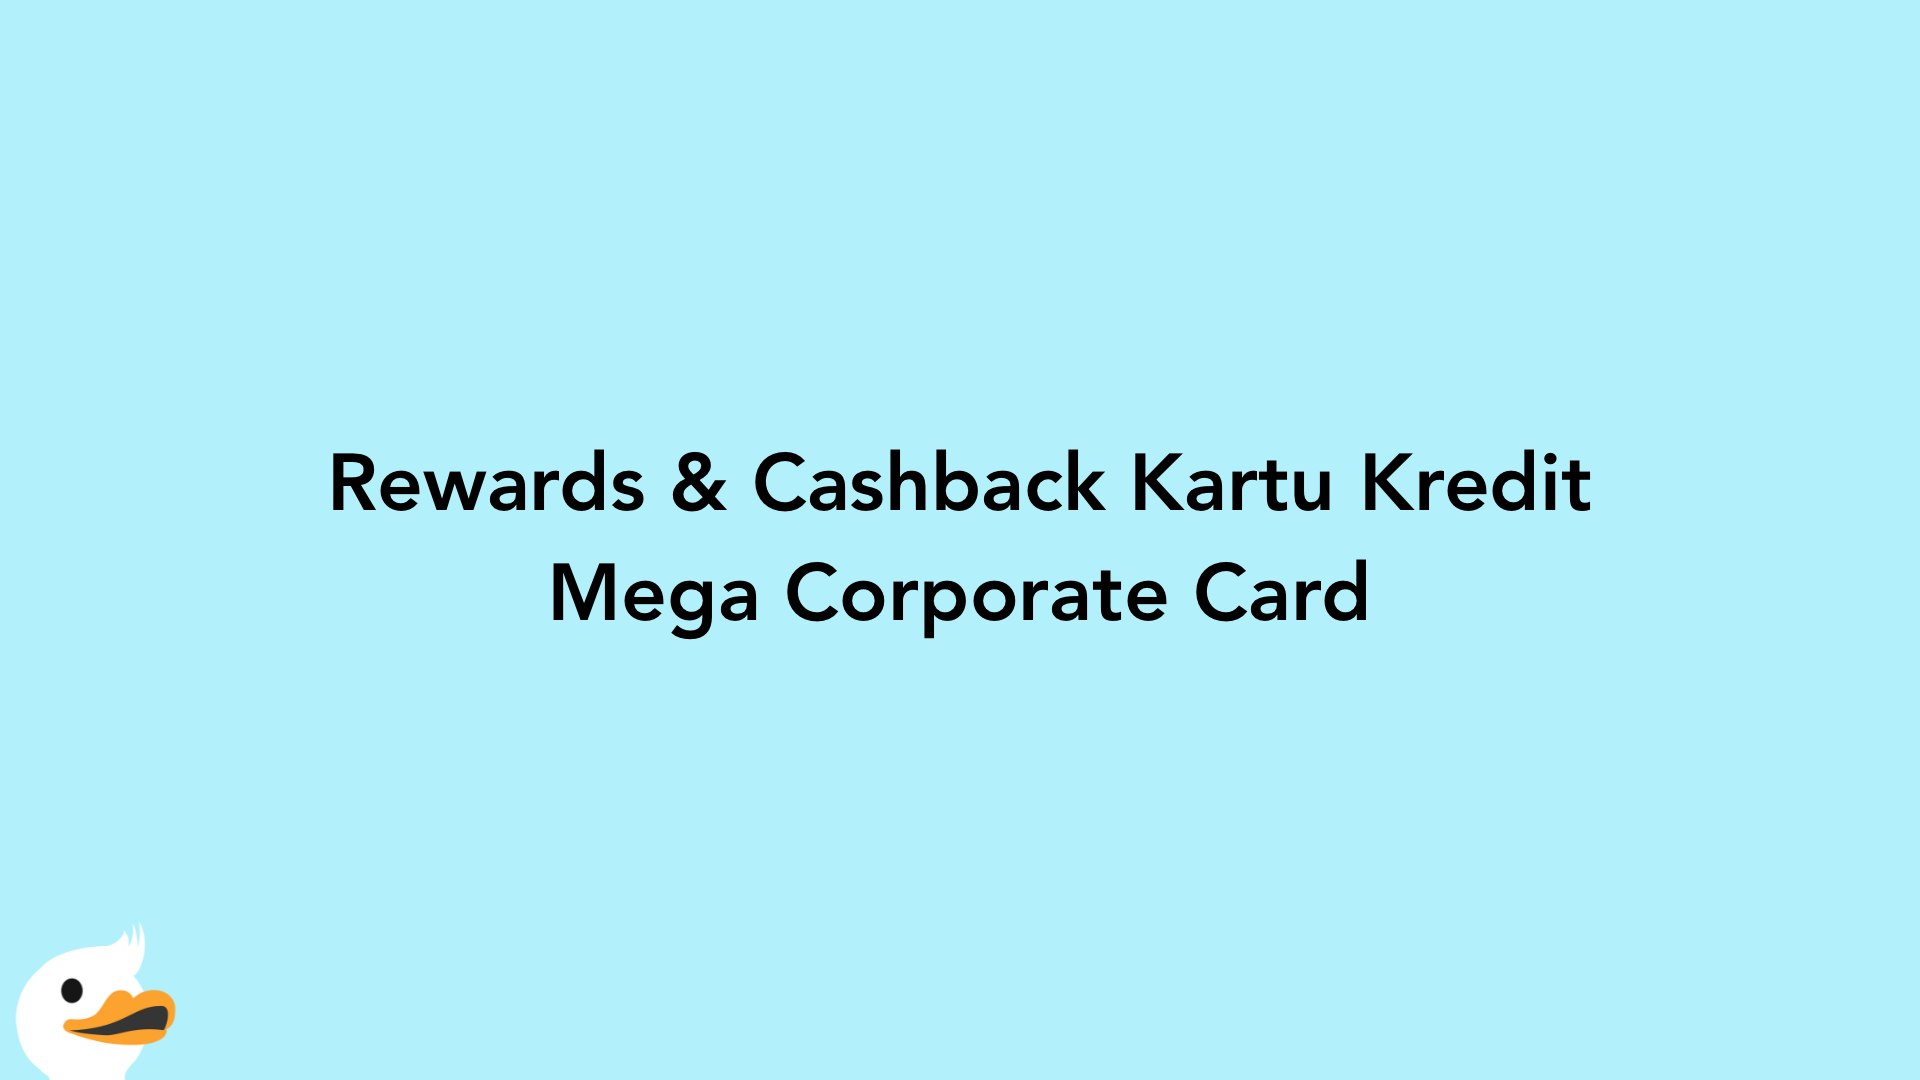 Rewards & Cashback Kartu Kredit Mega Corporate Card